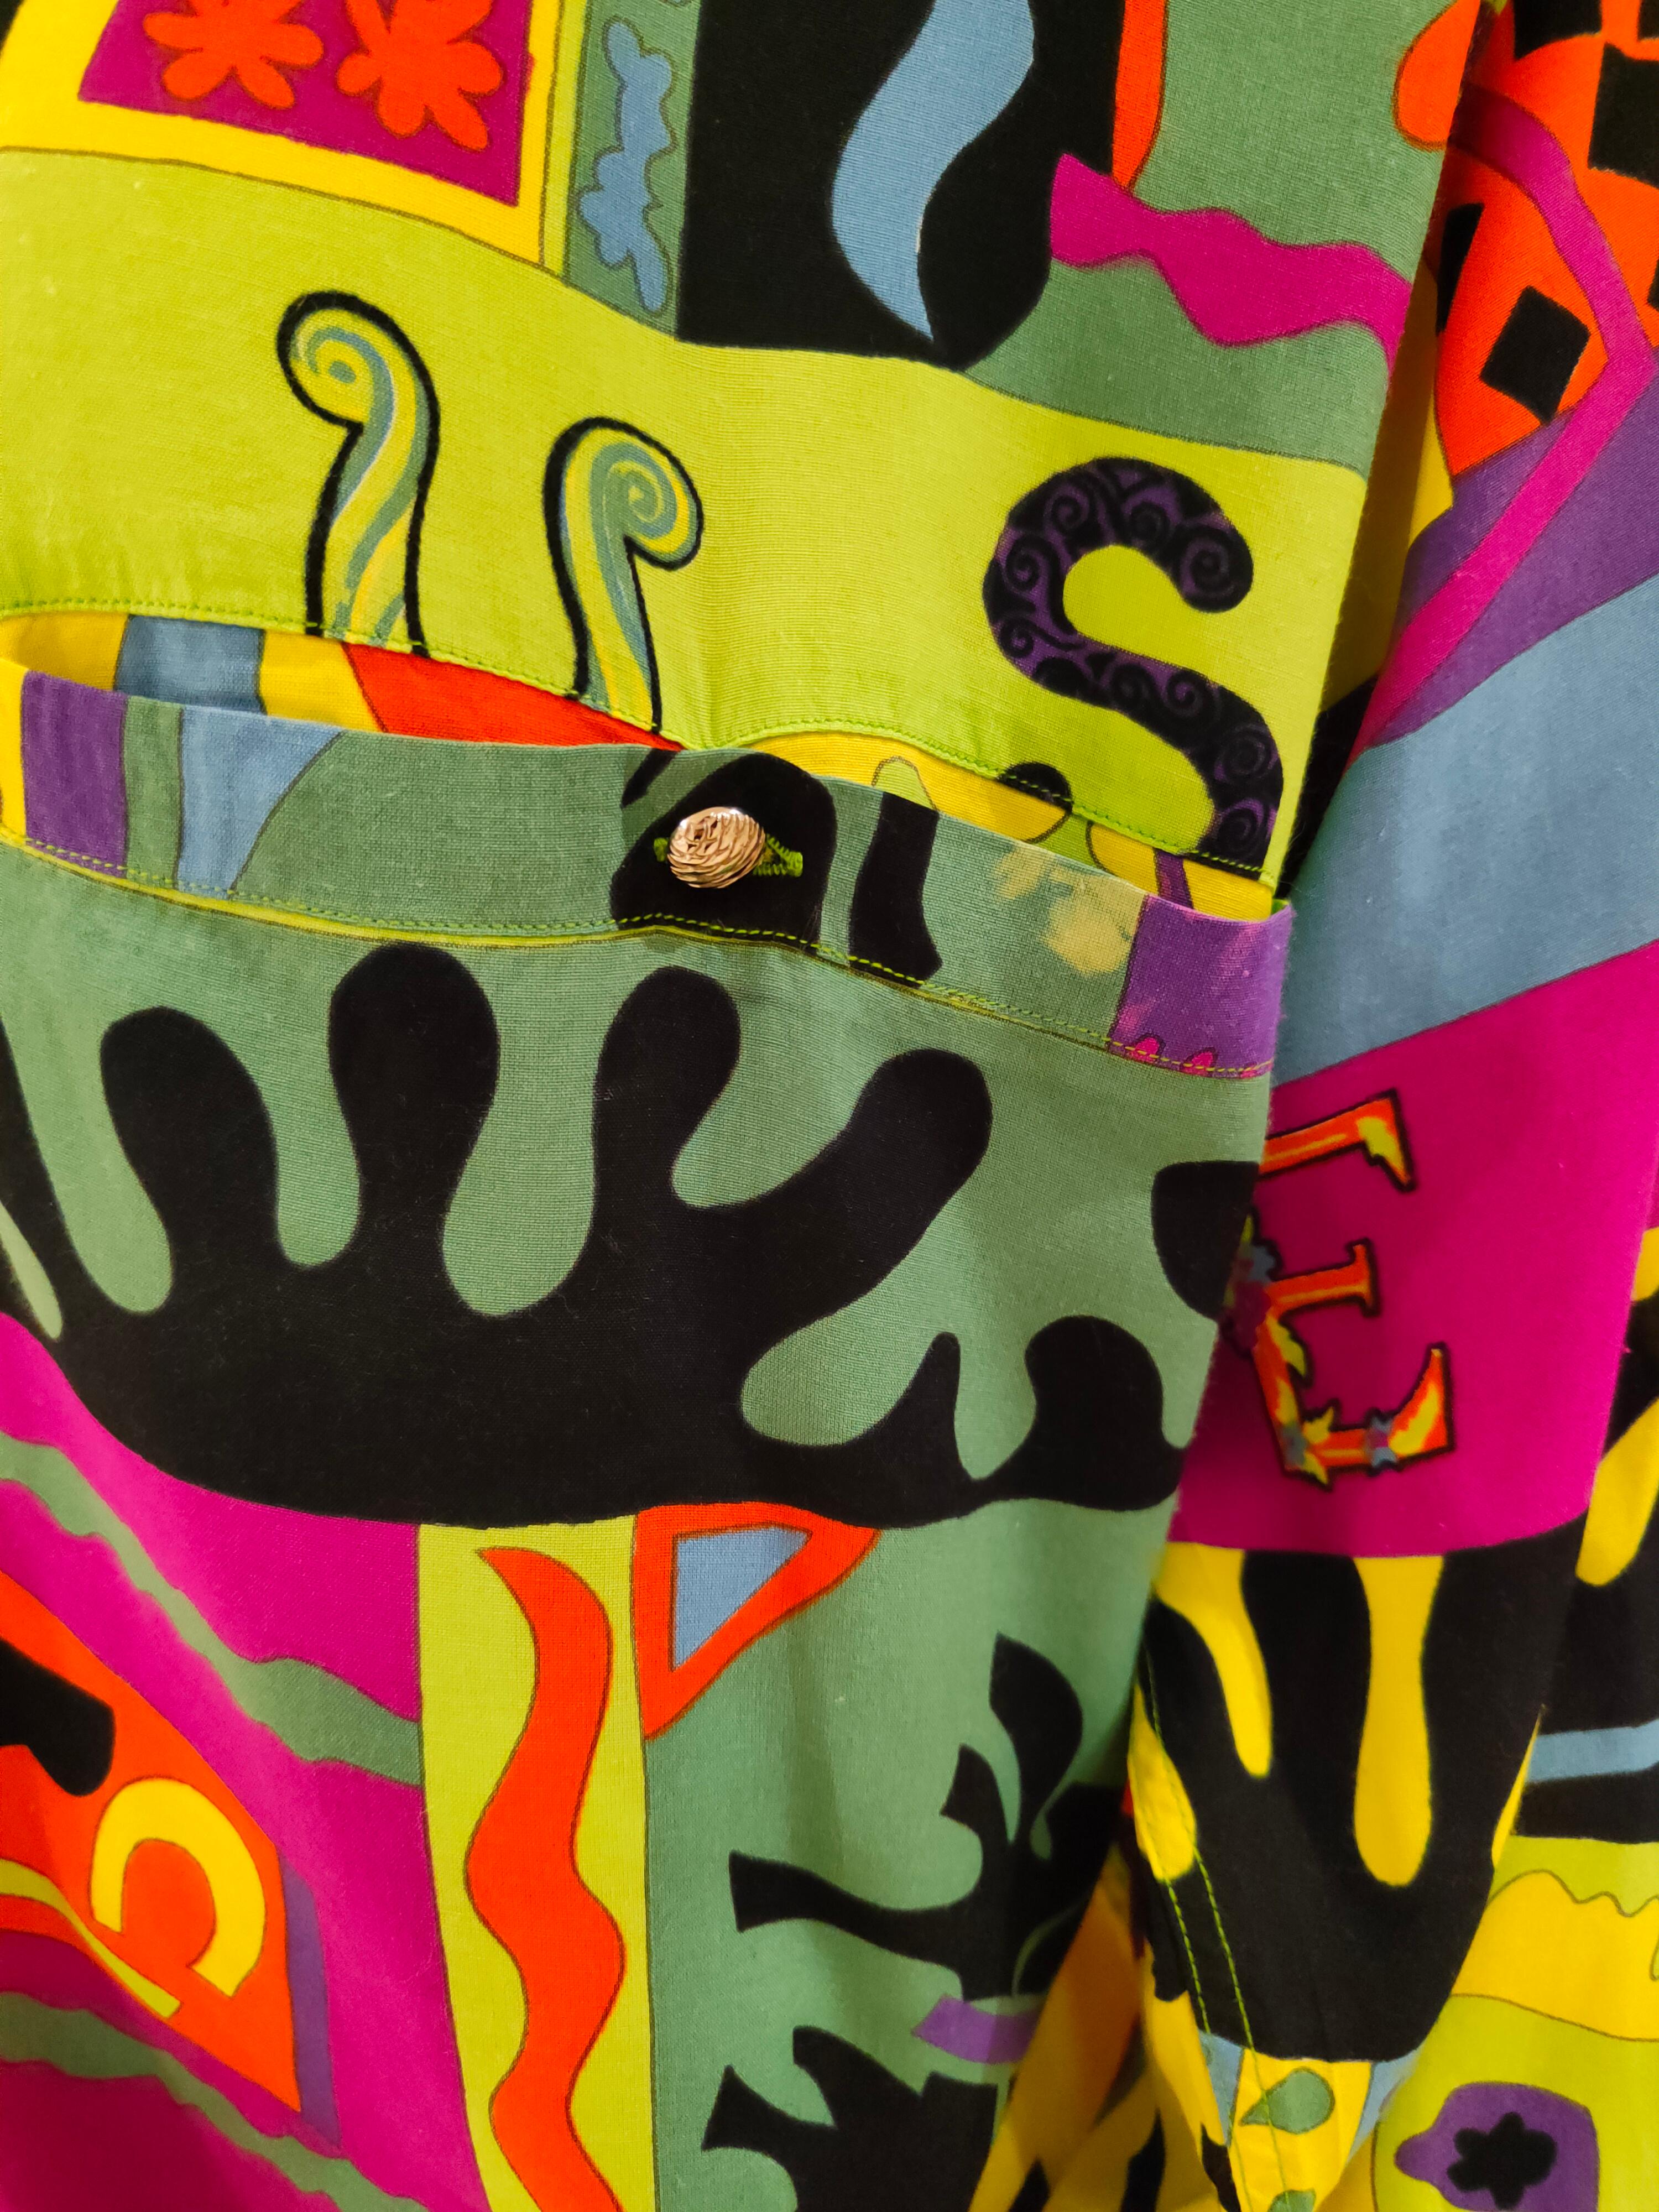 Gianni Versace Versus multicoloured shirt
Size 48